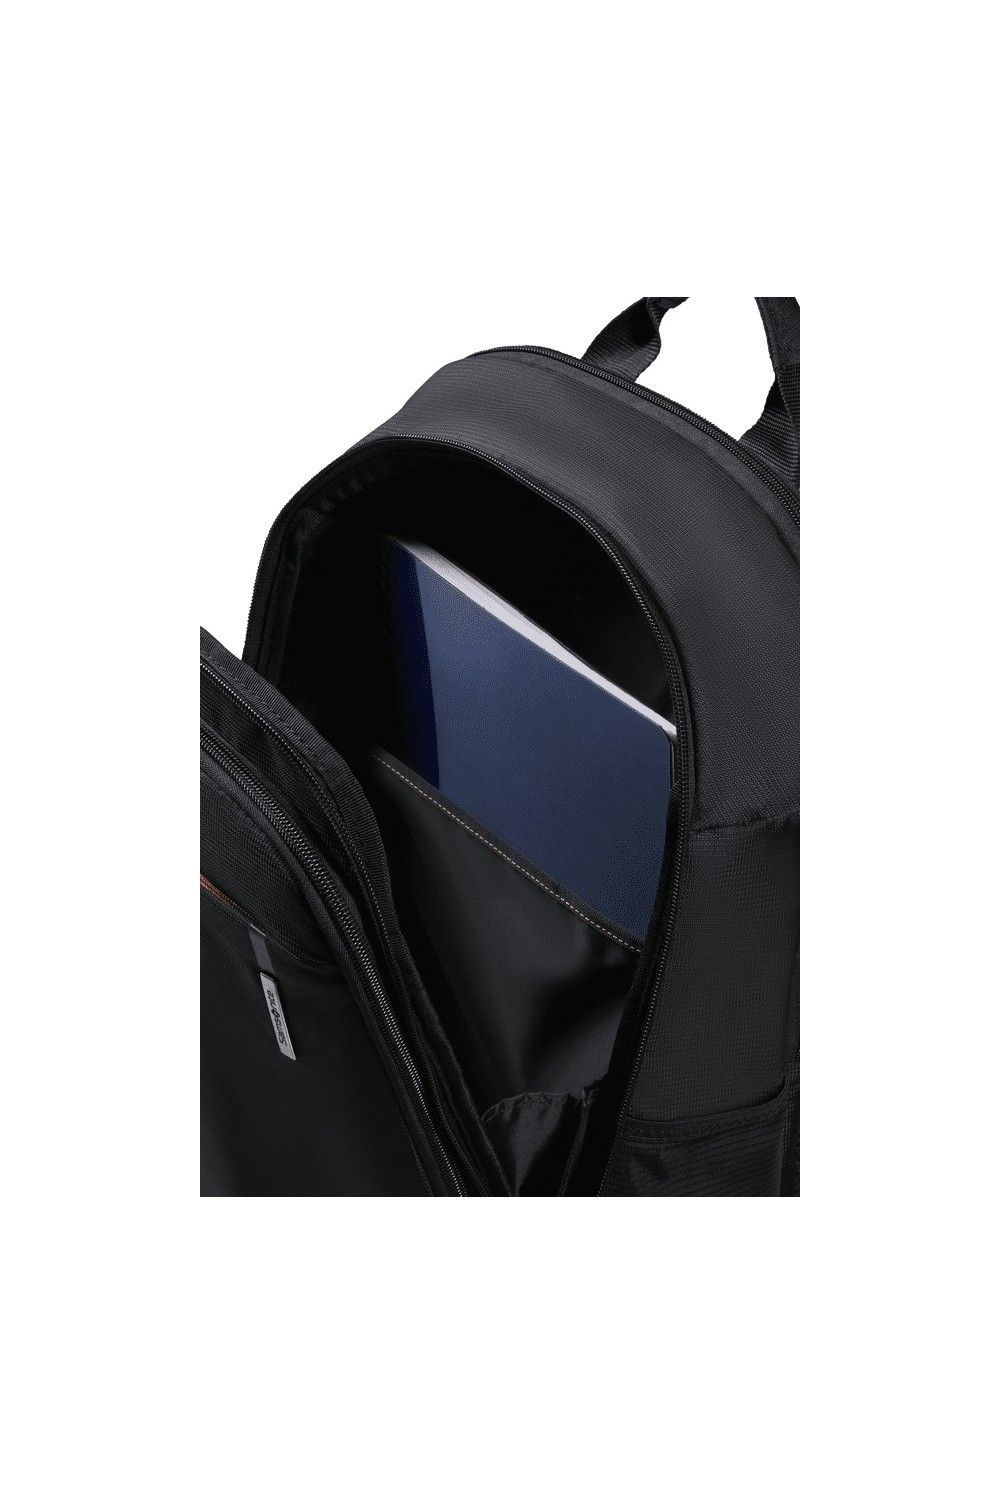 Samsonite Laptop Backpack Network 4 15 inches black